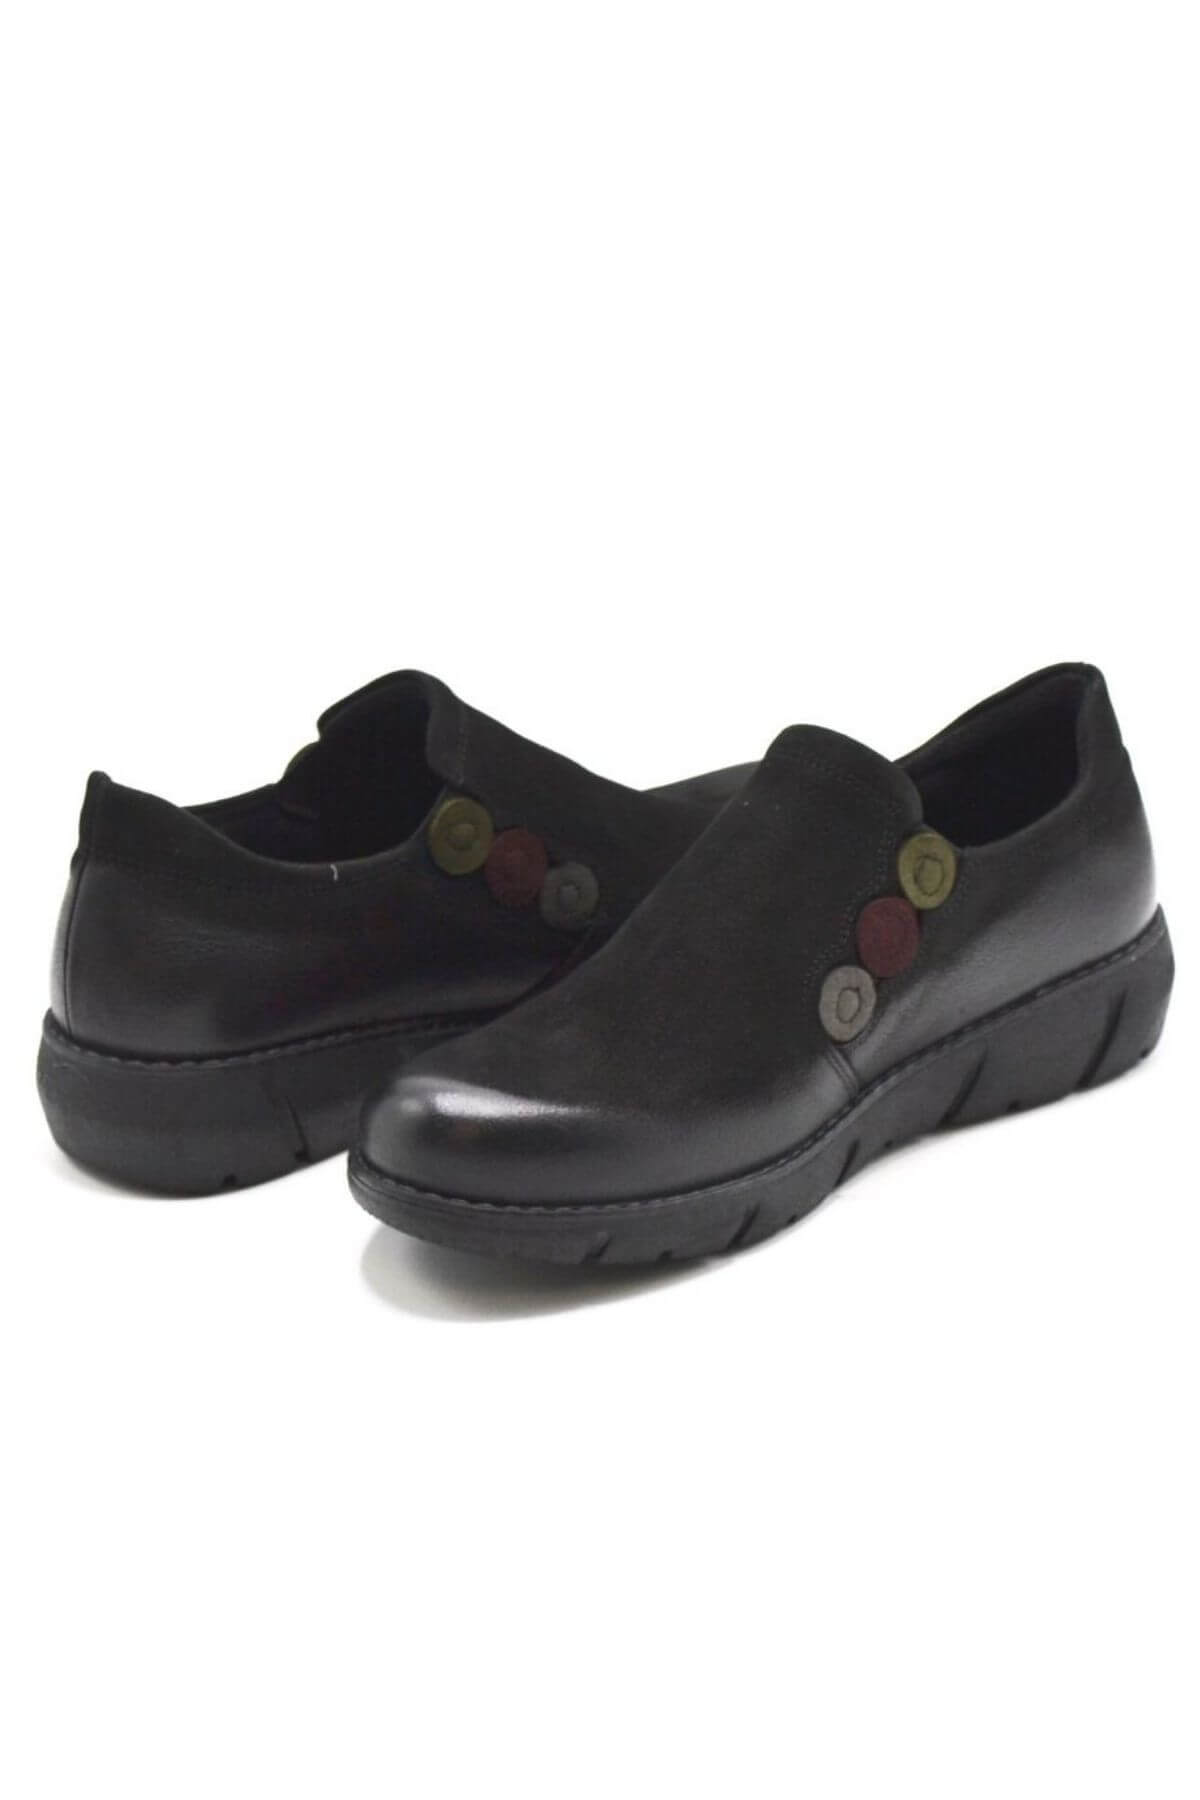 Kadın Casual Nubuk Deri Siyah Ayakkabı 1953714K - Thumbnail